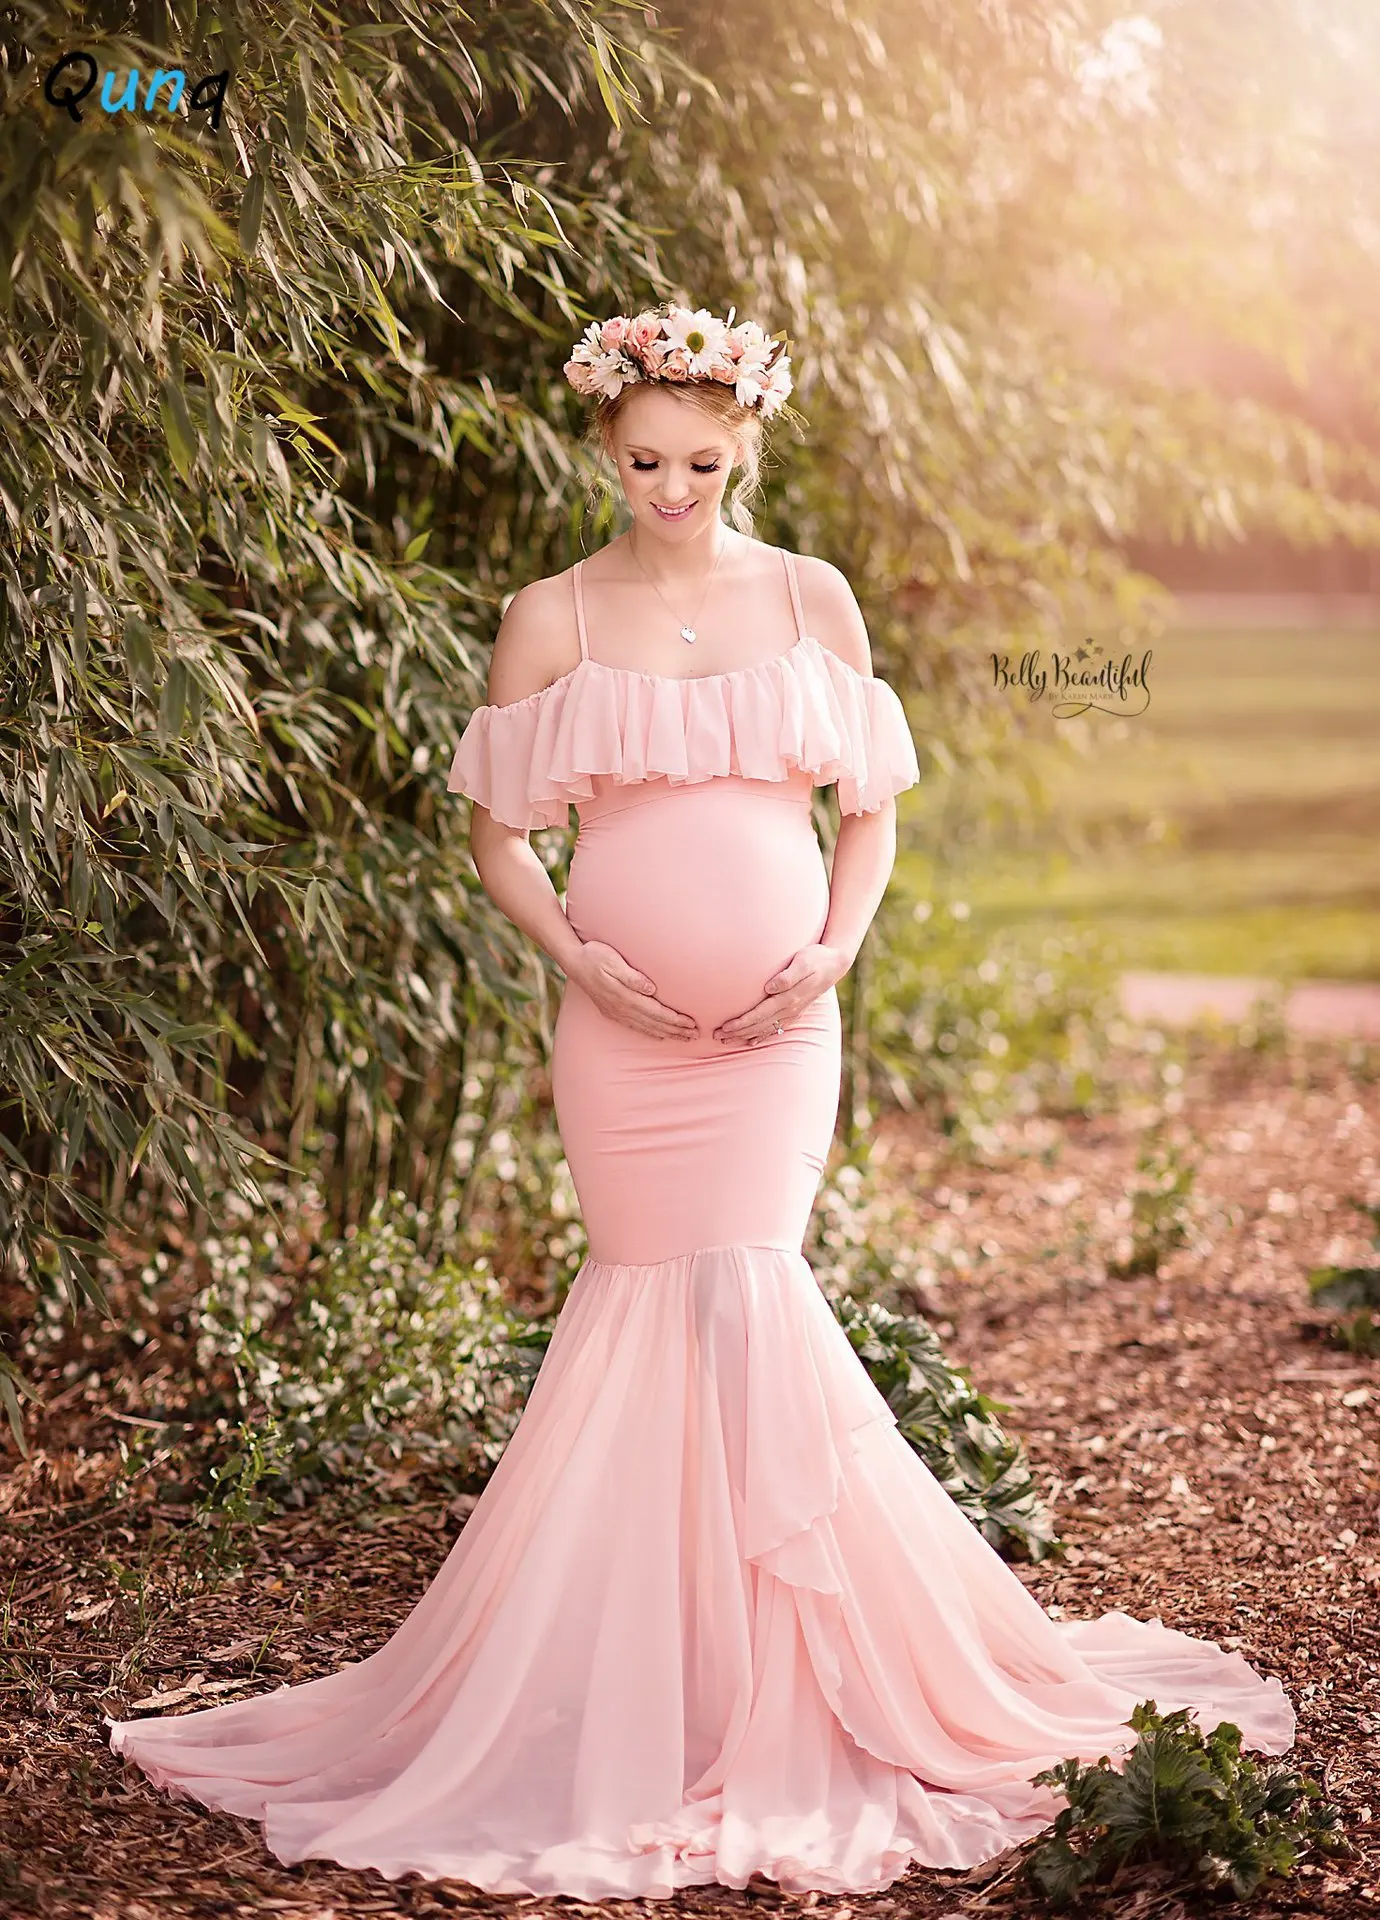 

Qunq New Maternity Wear Women Solid Fly Sleeve Falbala Lace Splicing Sweet Princess Dress Elegant Pregnancy ropa de maternidad